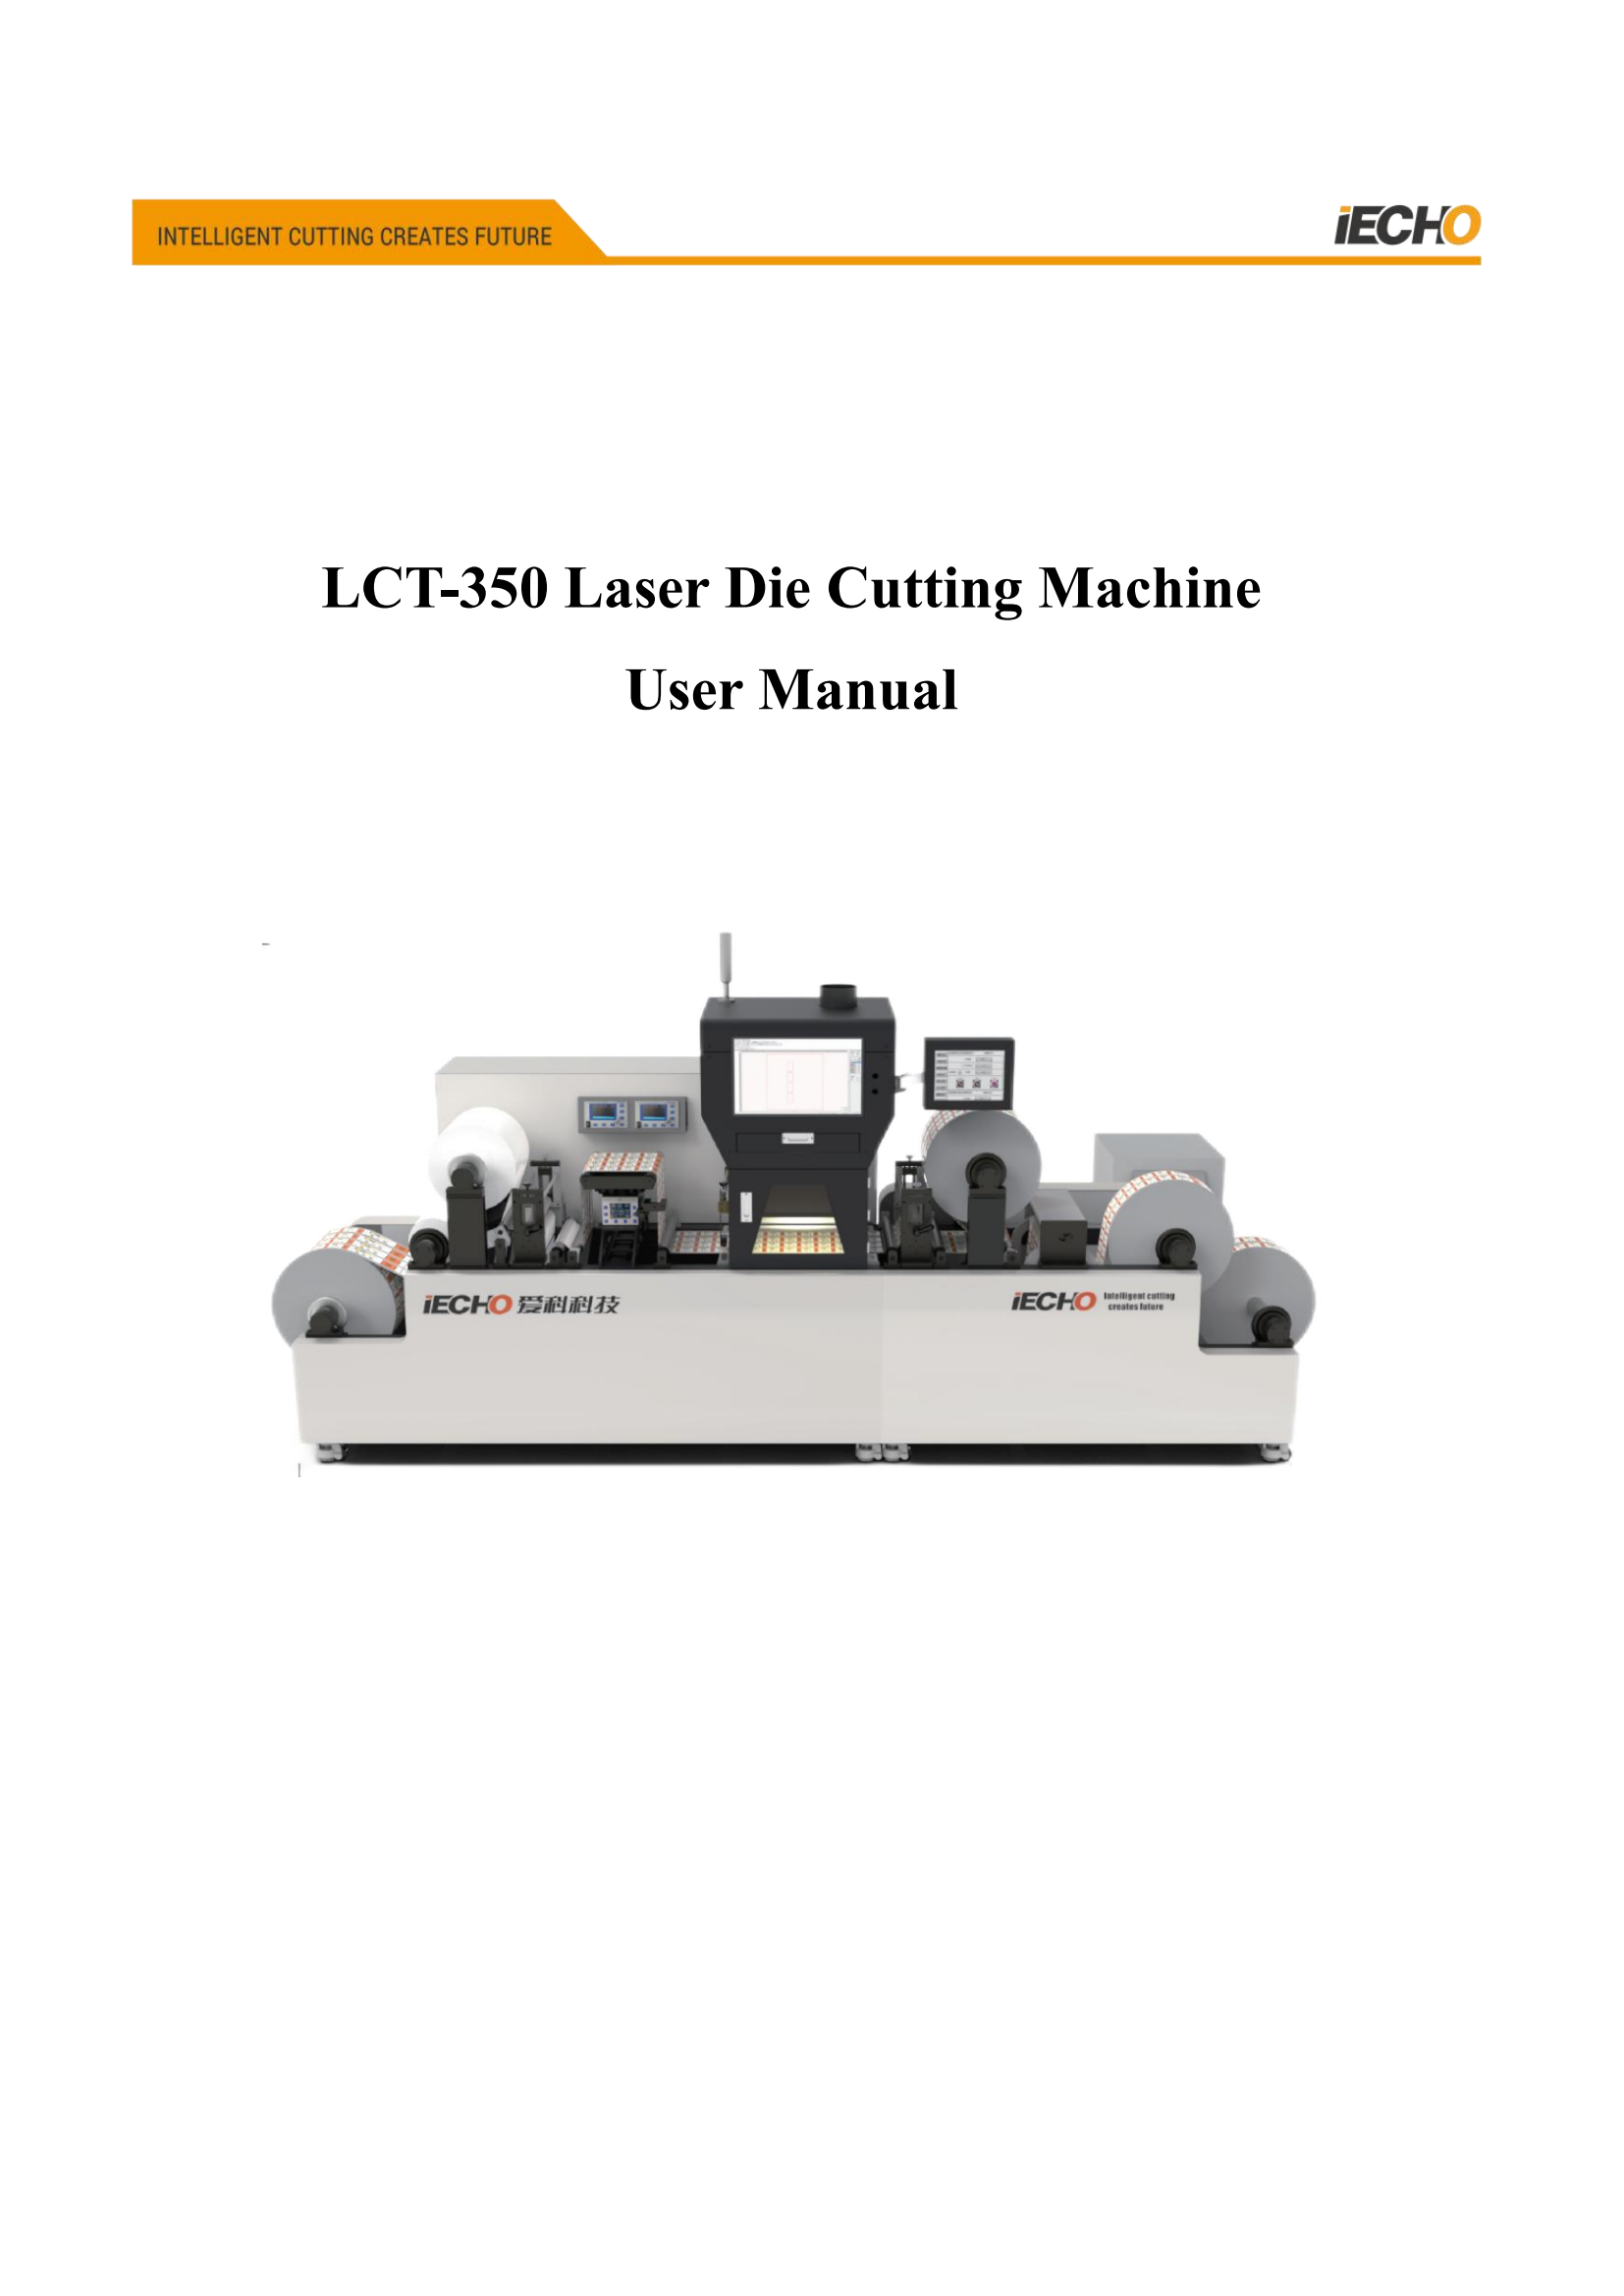 LCT-350 User Manual